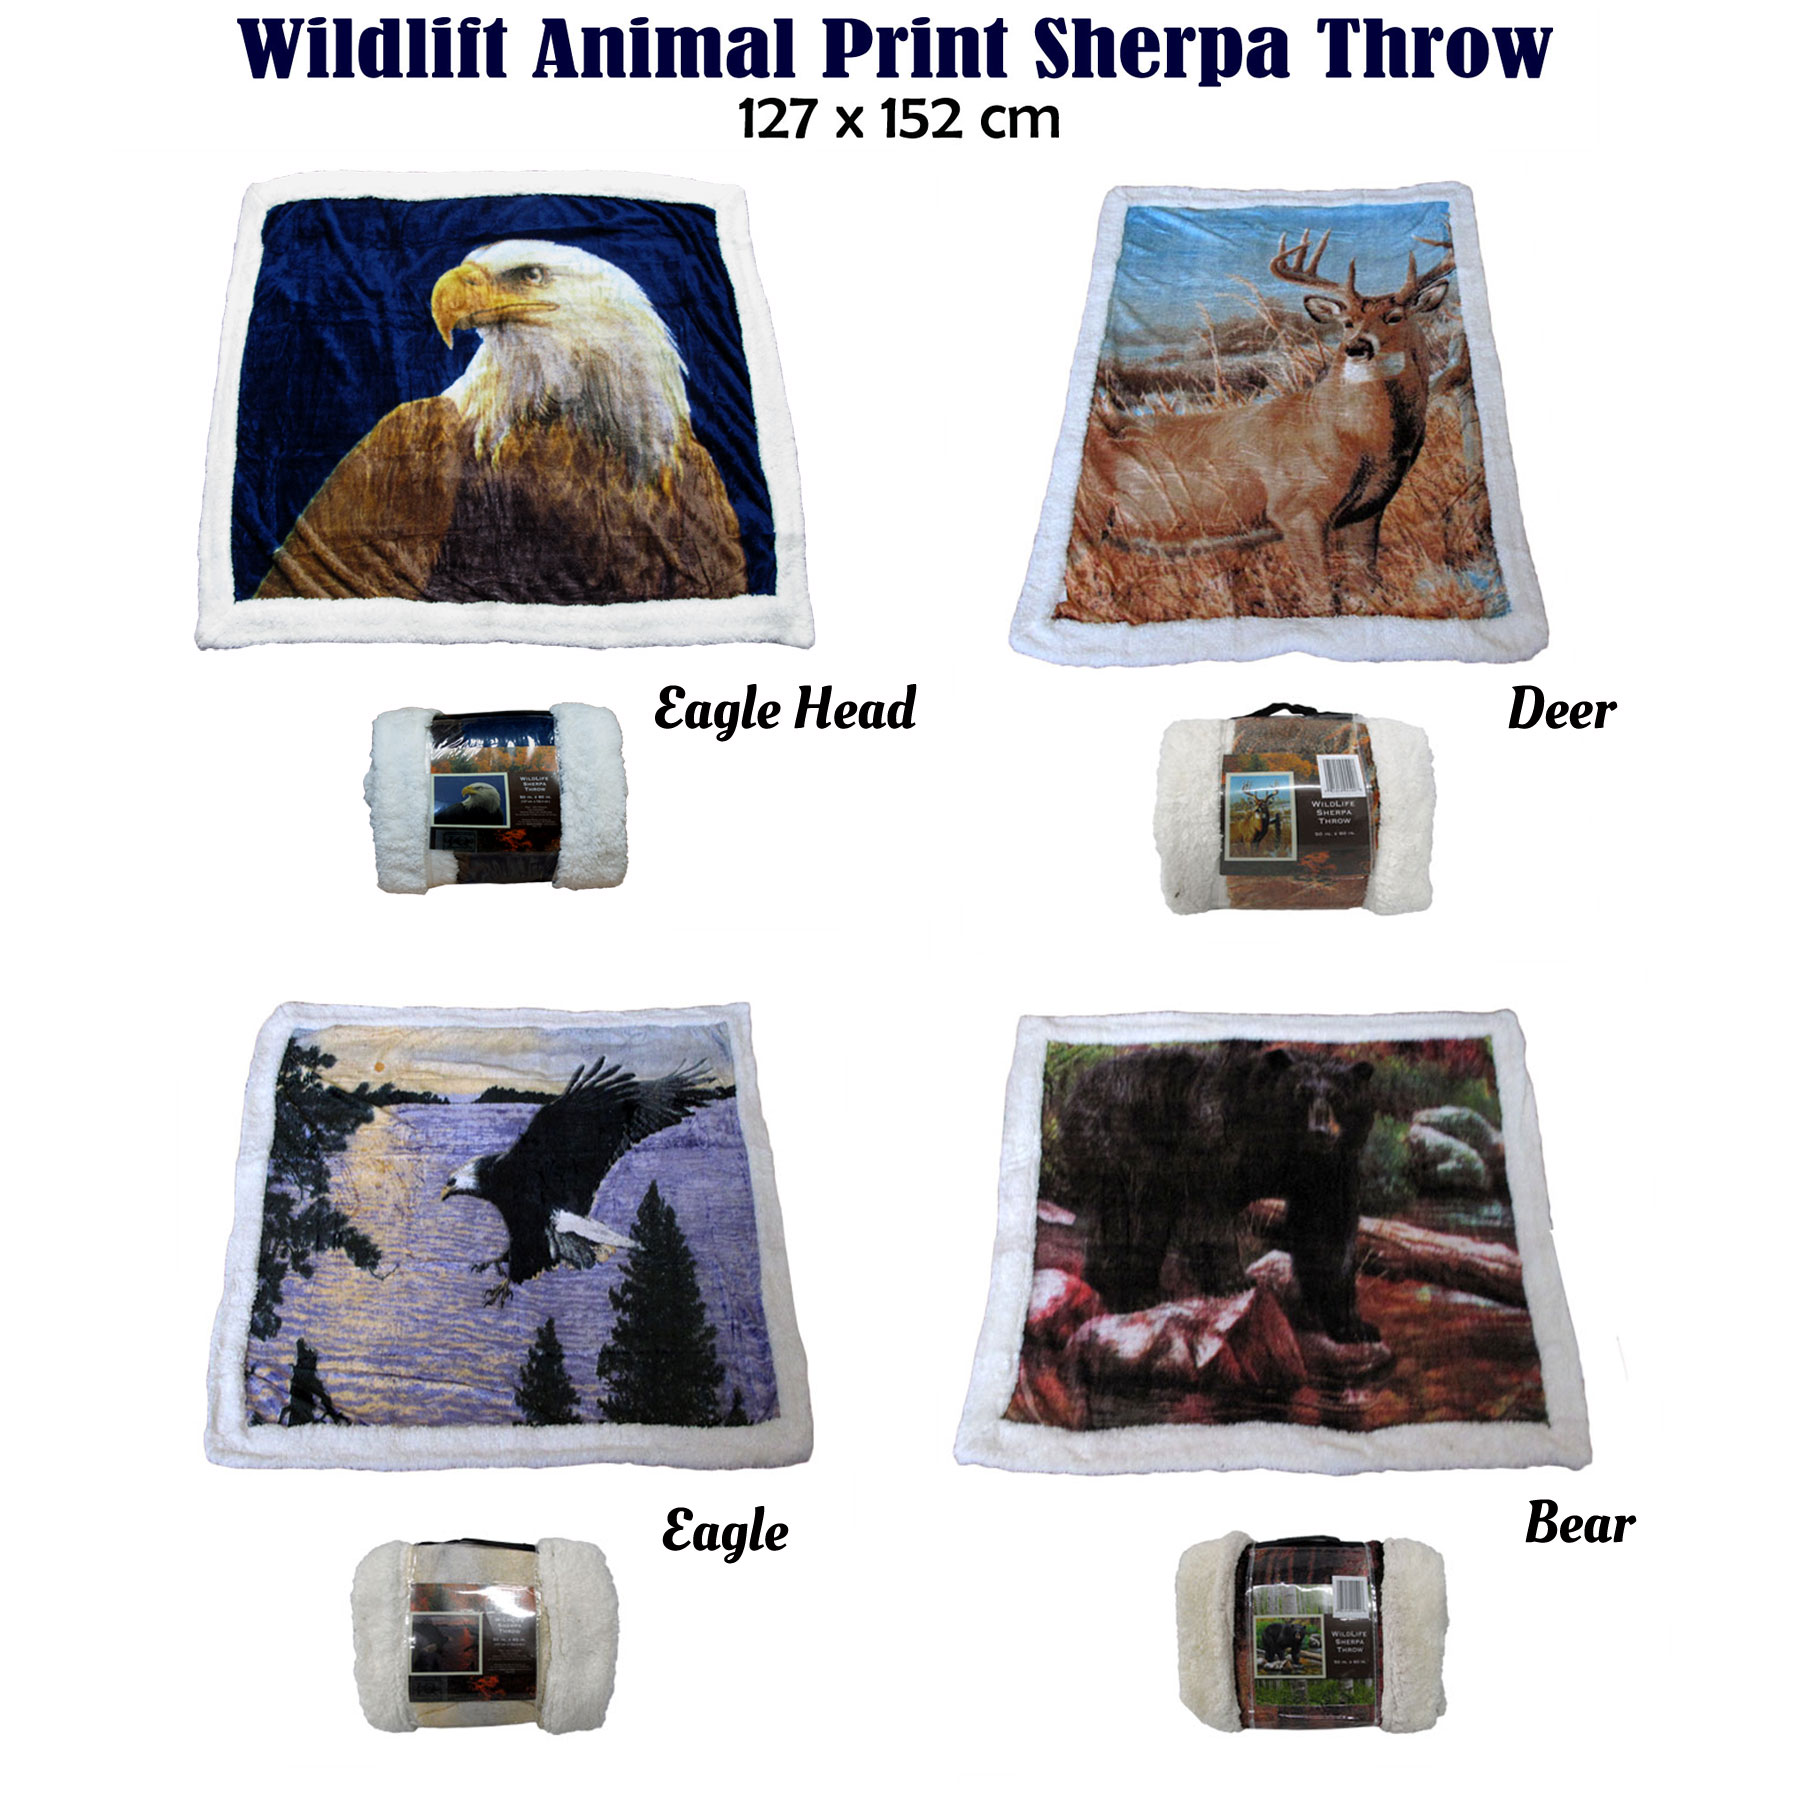 Wildlife Animal Safari Ultra Soft Sherpa Bed Throw Rug Blanket 127 x 152cm